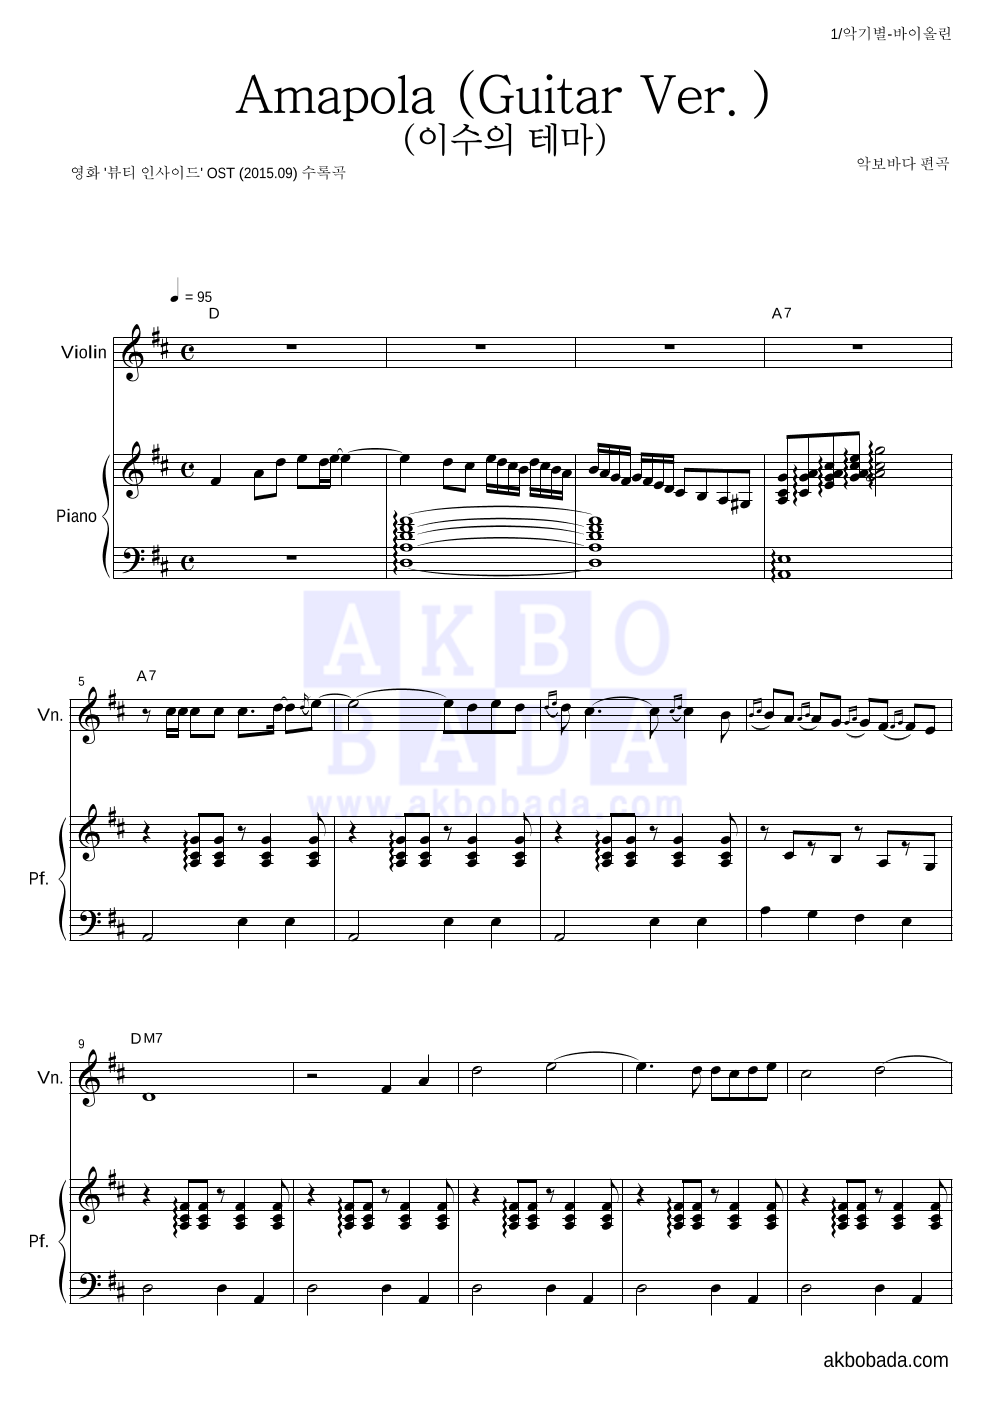 The Soundtrack Kings - Amapola (Guitar Ver.) (이수의 테마) 바이올린&피아노 악보 